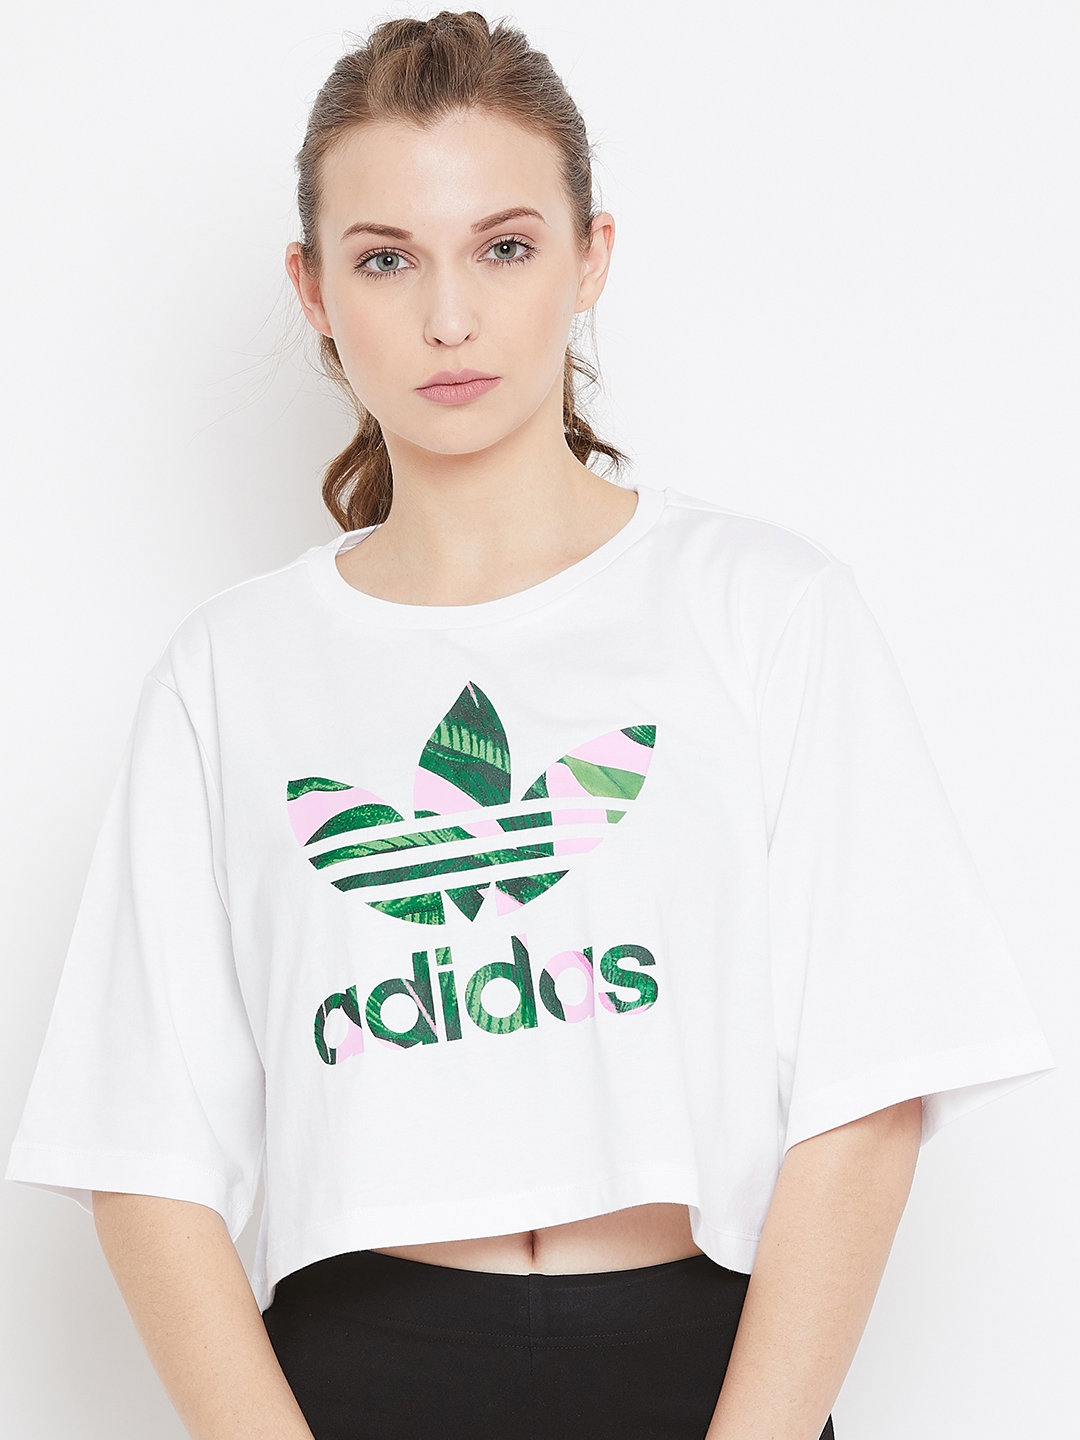 adidas printed t shirt women's